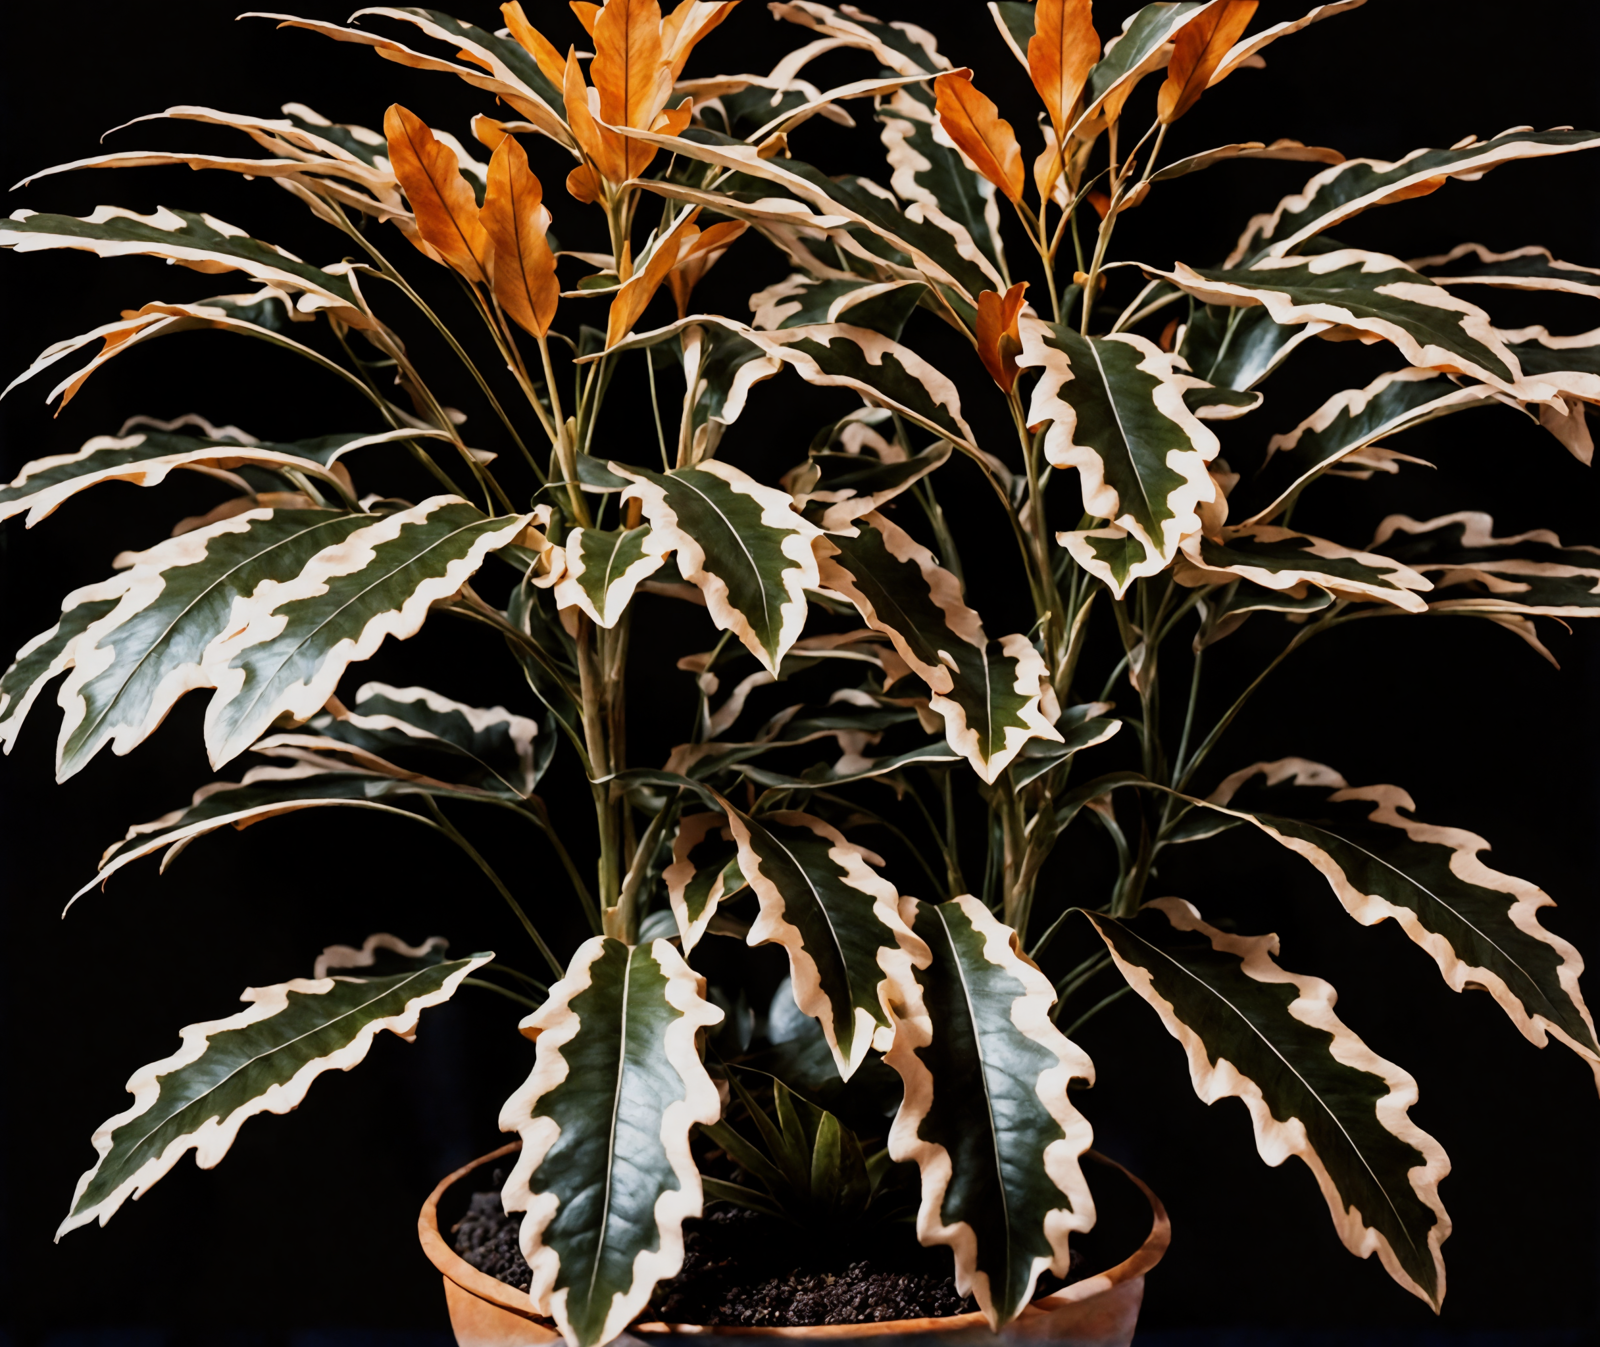 Plerandra elegantissima, a lush green shrub in a pot, with clear lighting against a dark background.